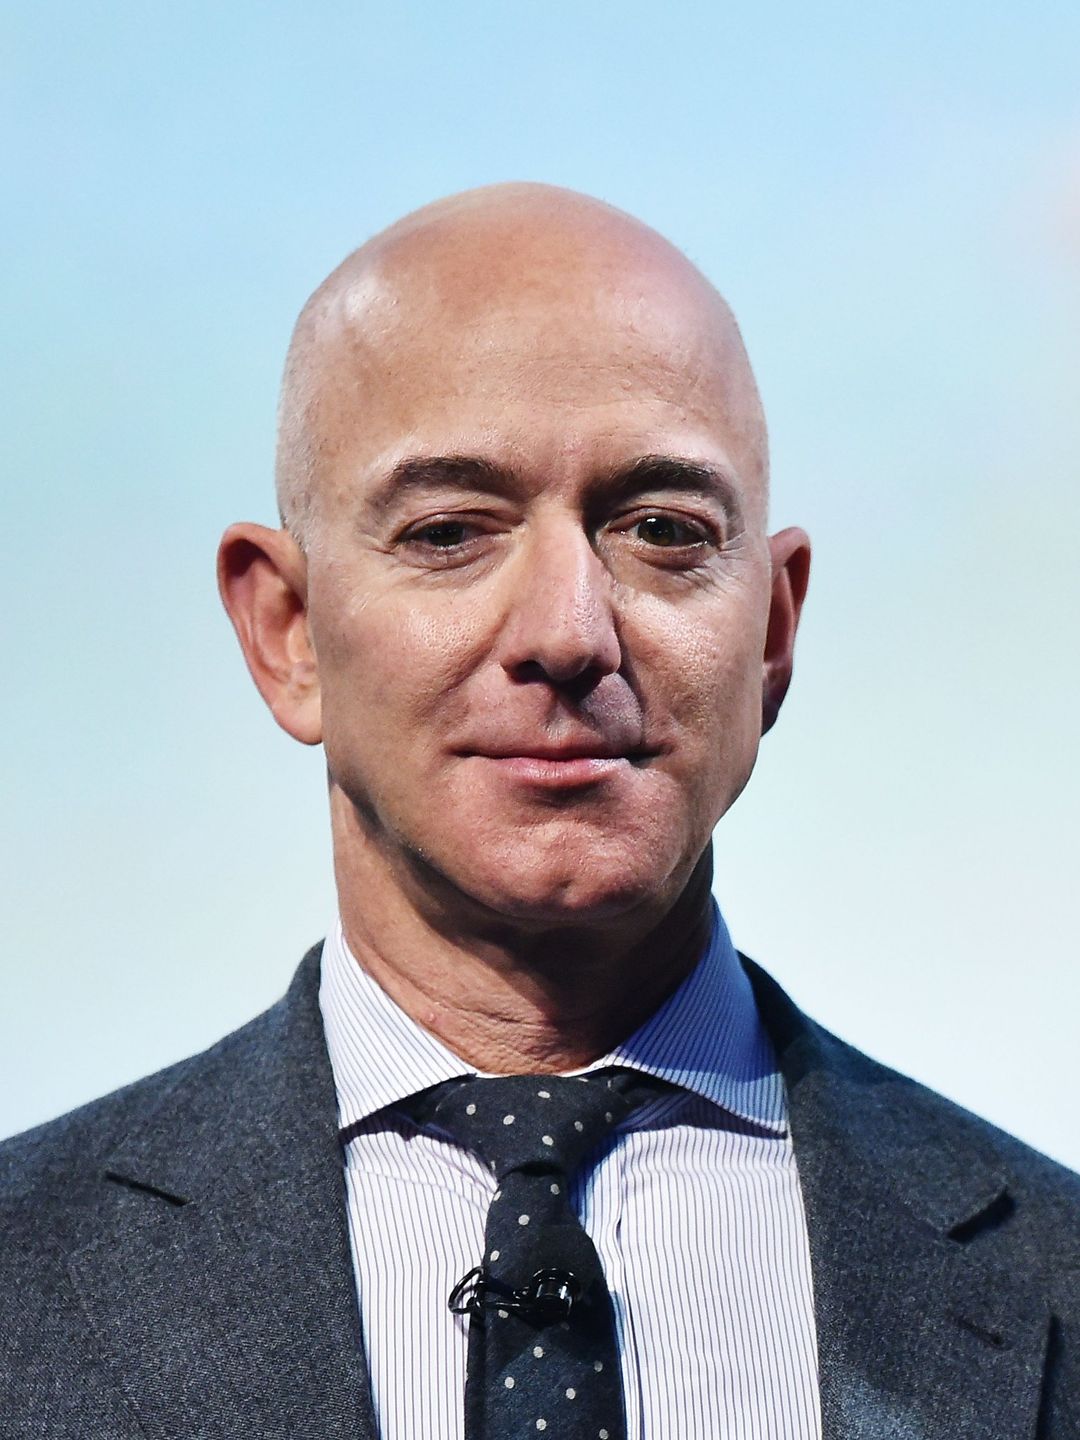 Jeff Bezos where is he now